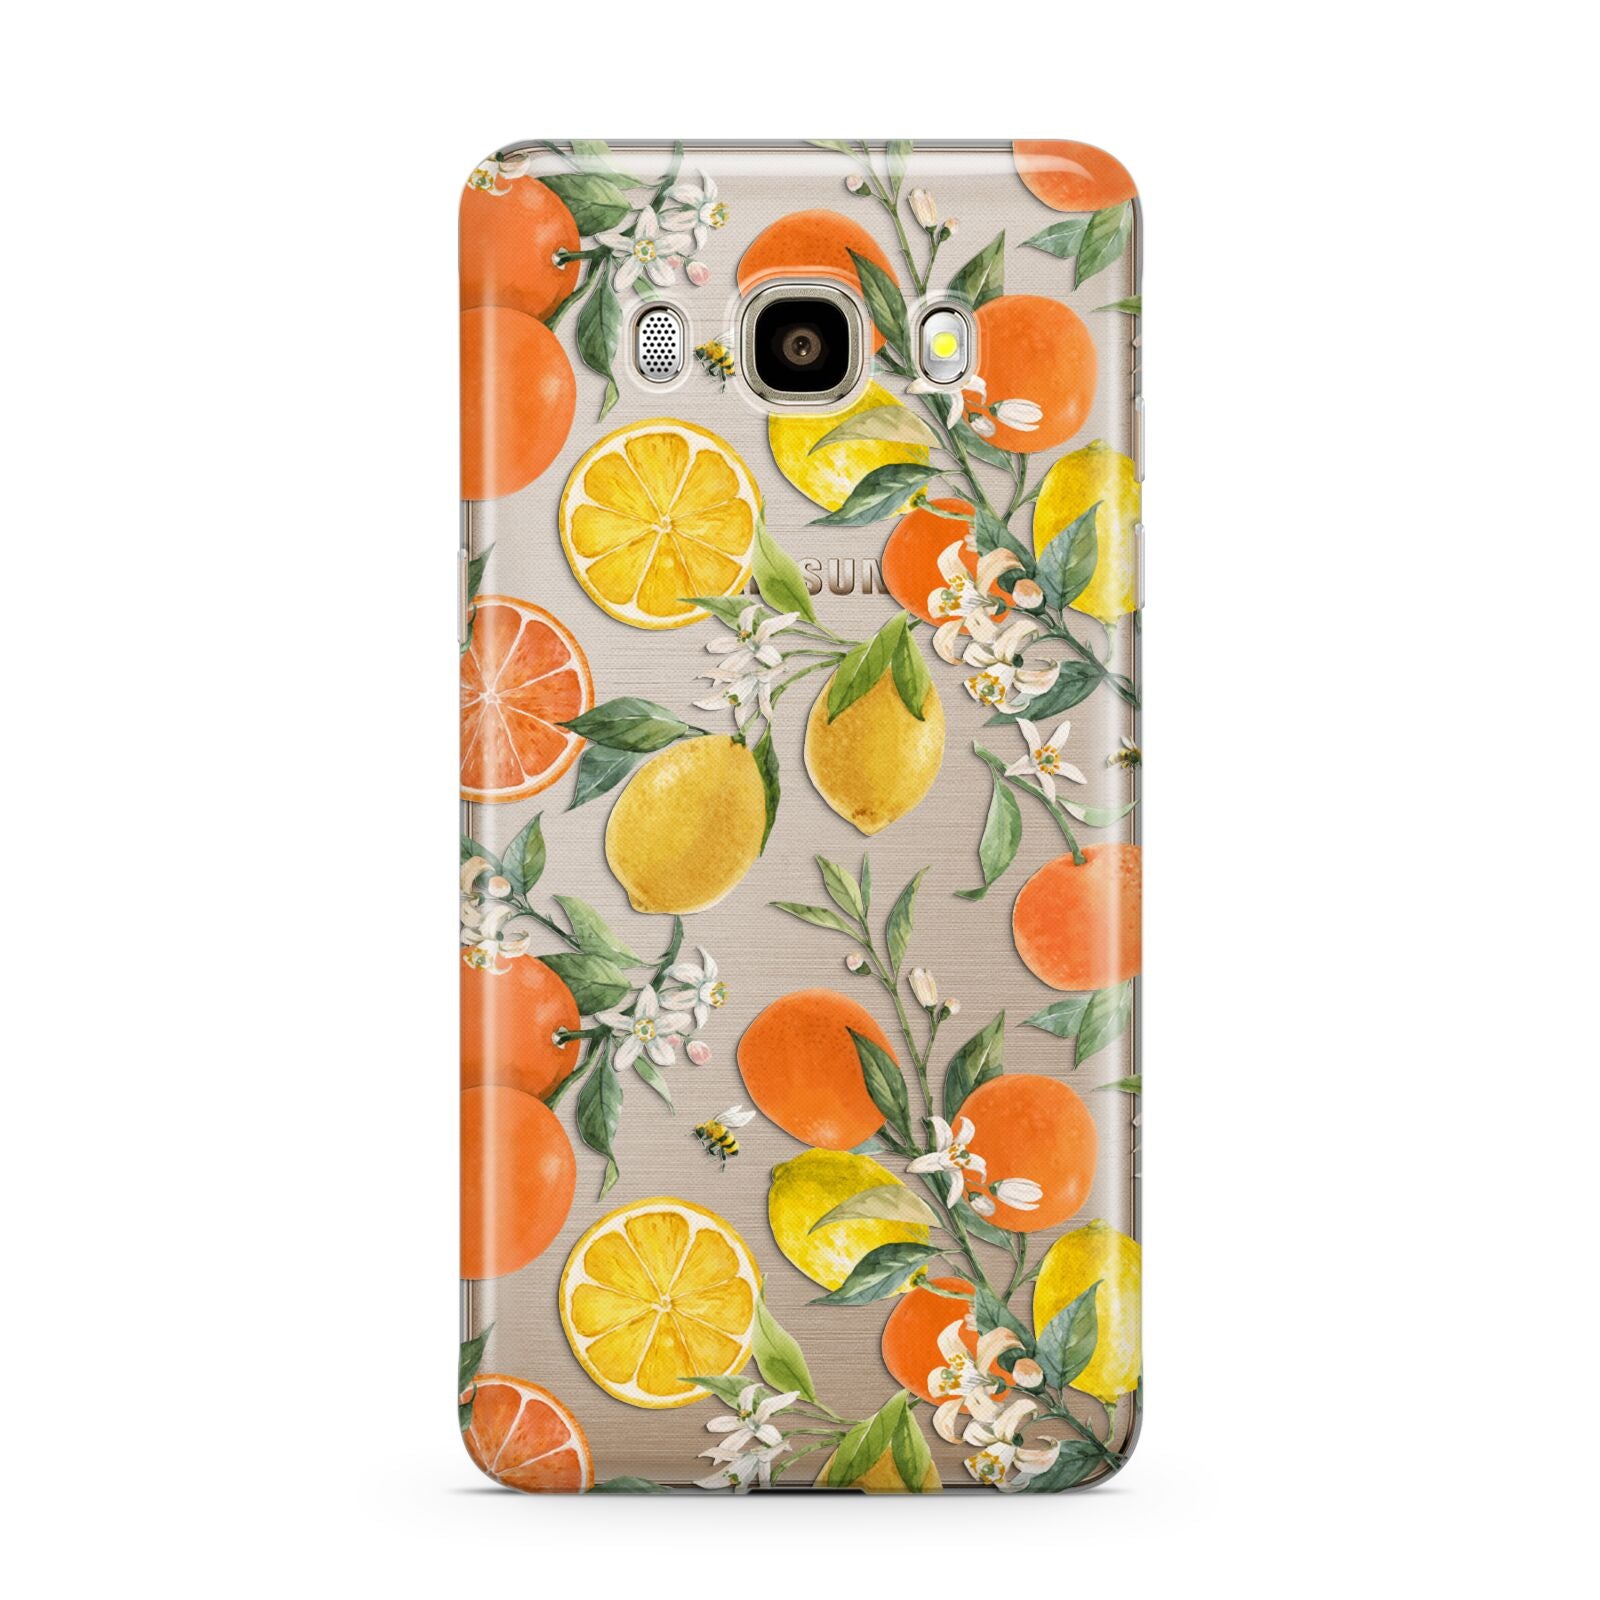 Lemons and Oranges Samsung Galaxy J7 2016 Case on gold phone